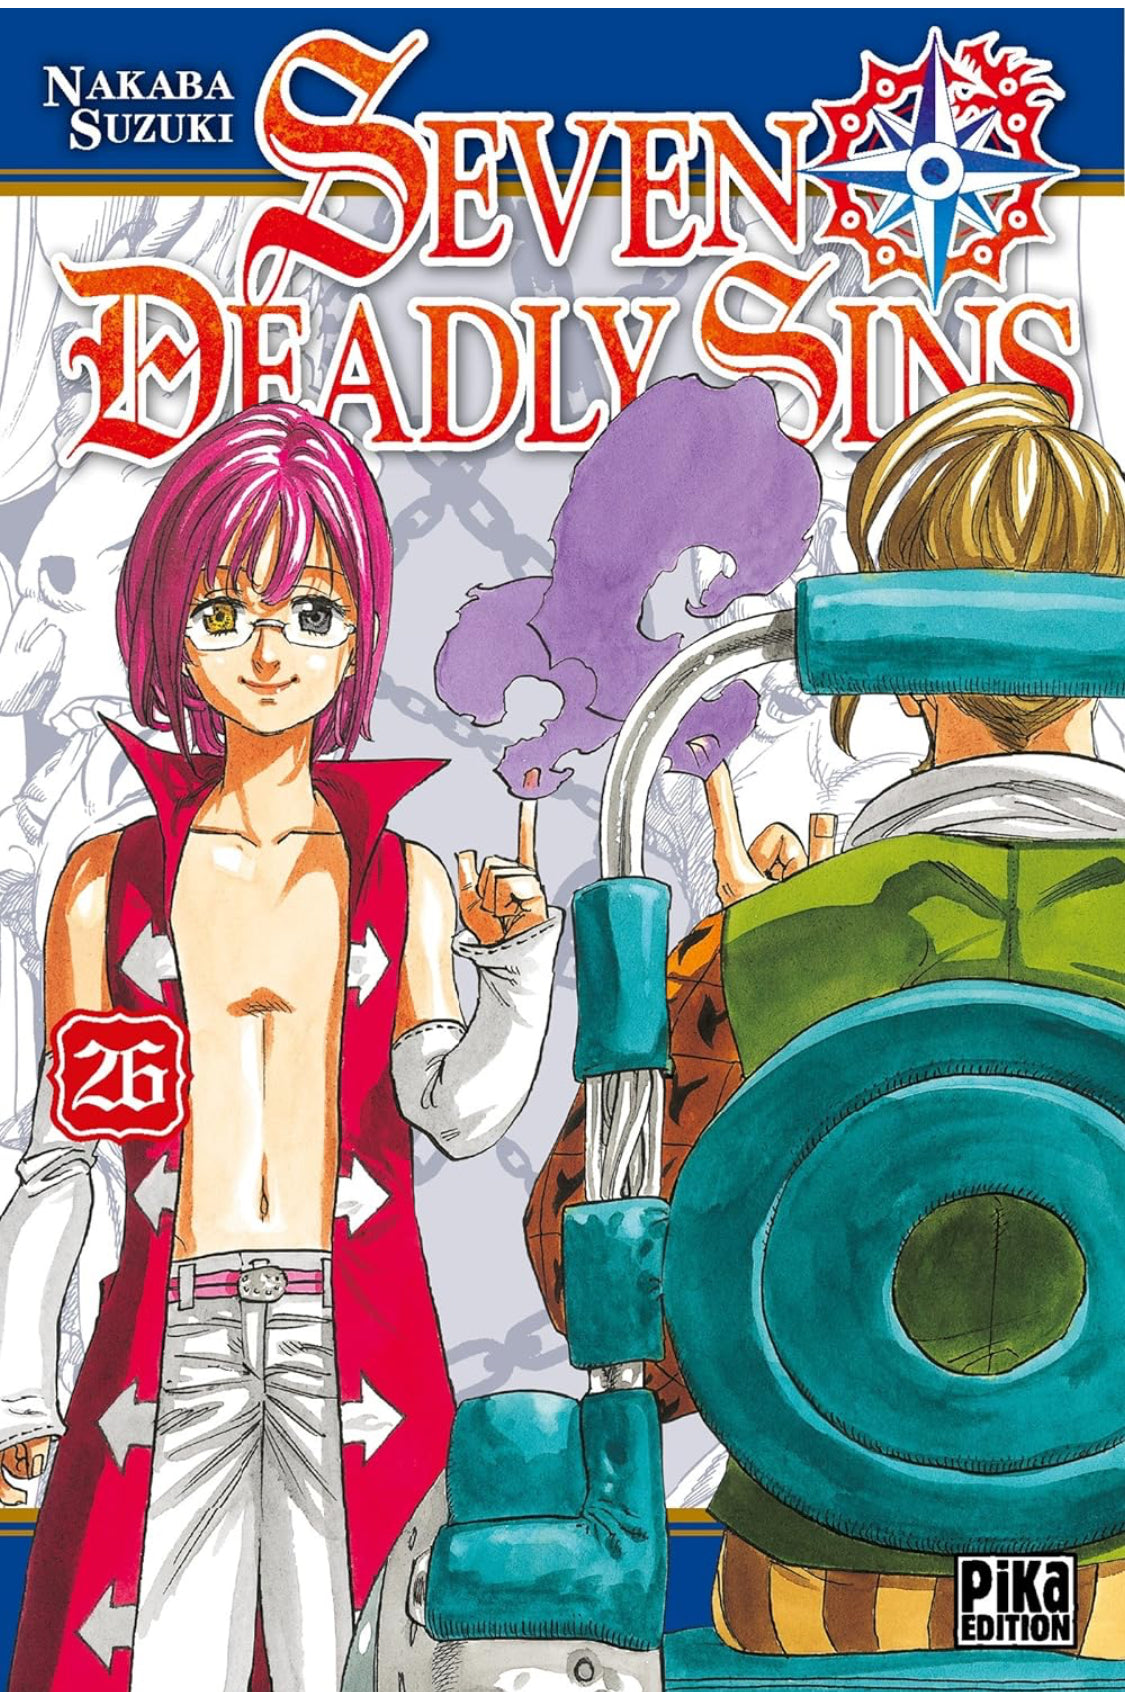 Seven Deadly Sins (26)